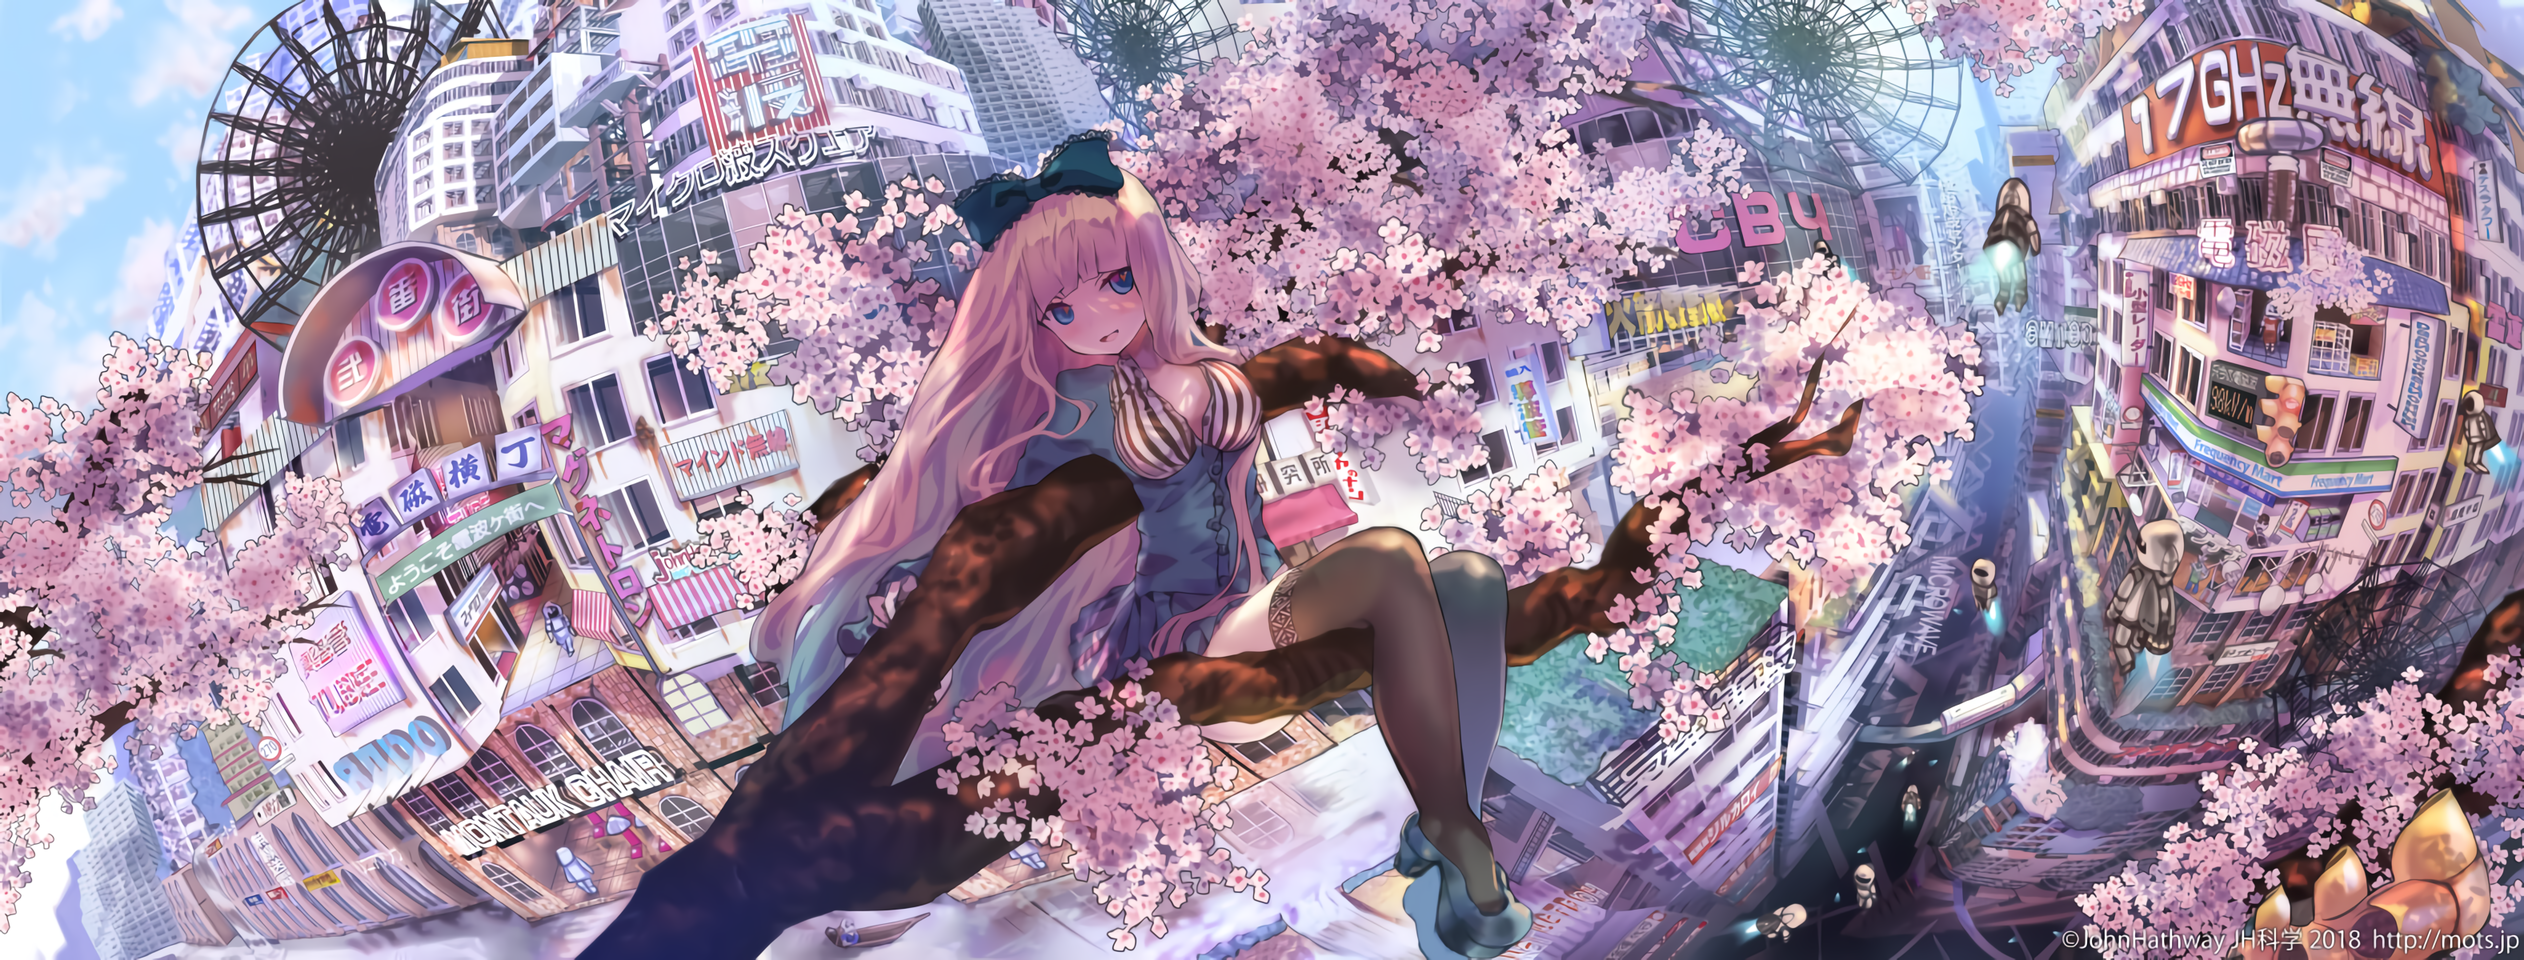 Anime 2524x960 anime girls JohnHathway anime colorful pink hair long hair cityscape